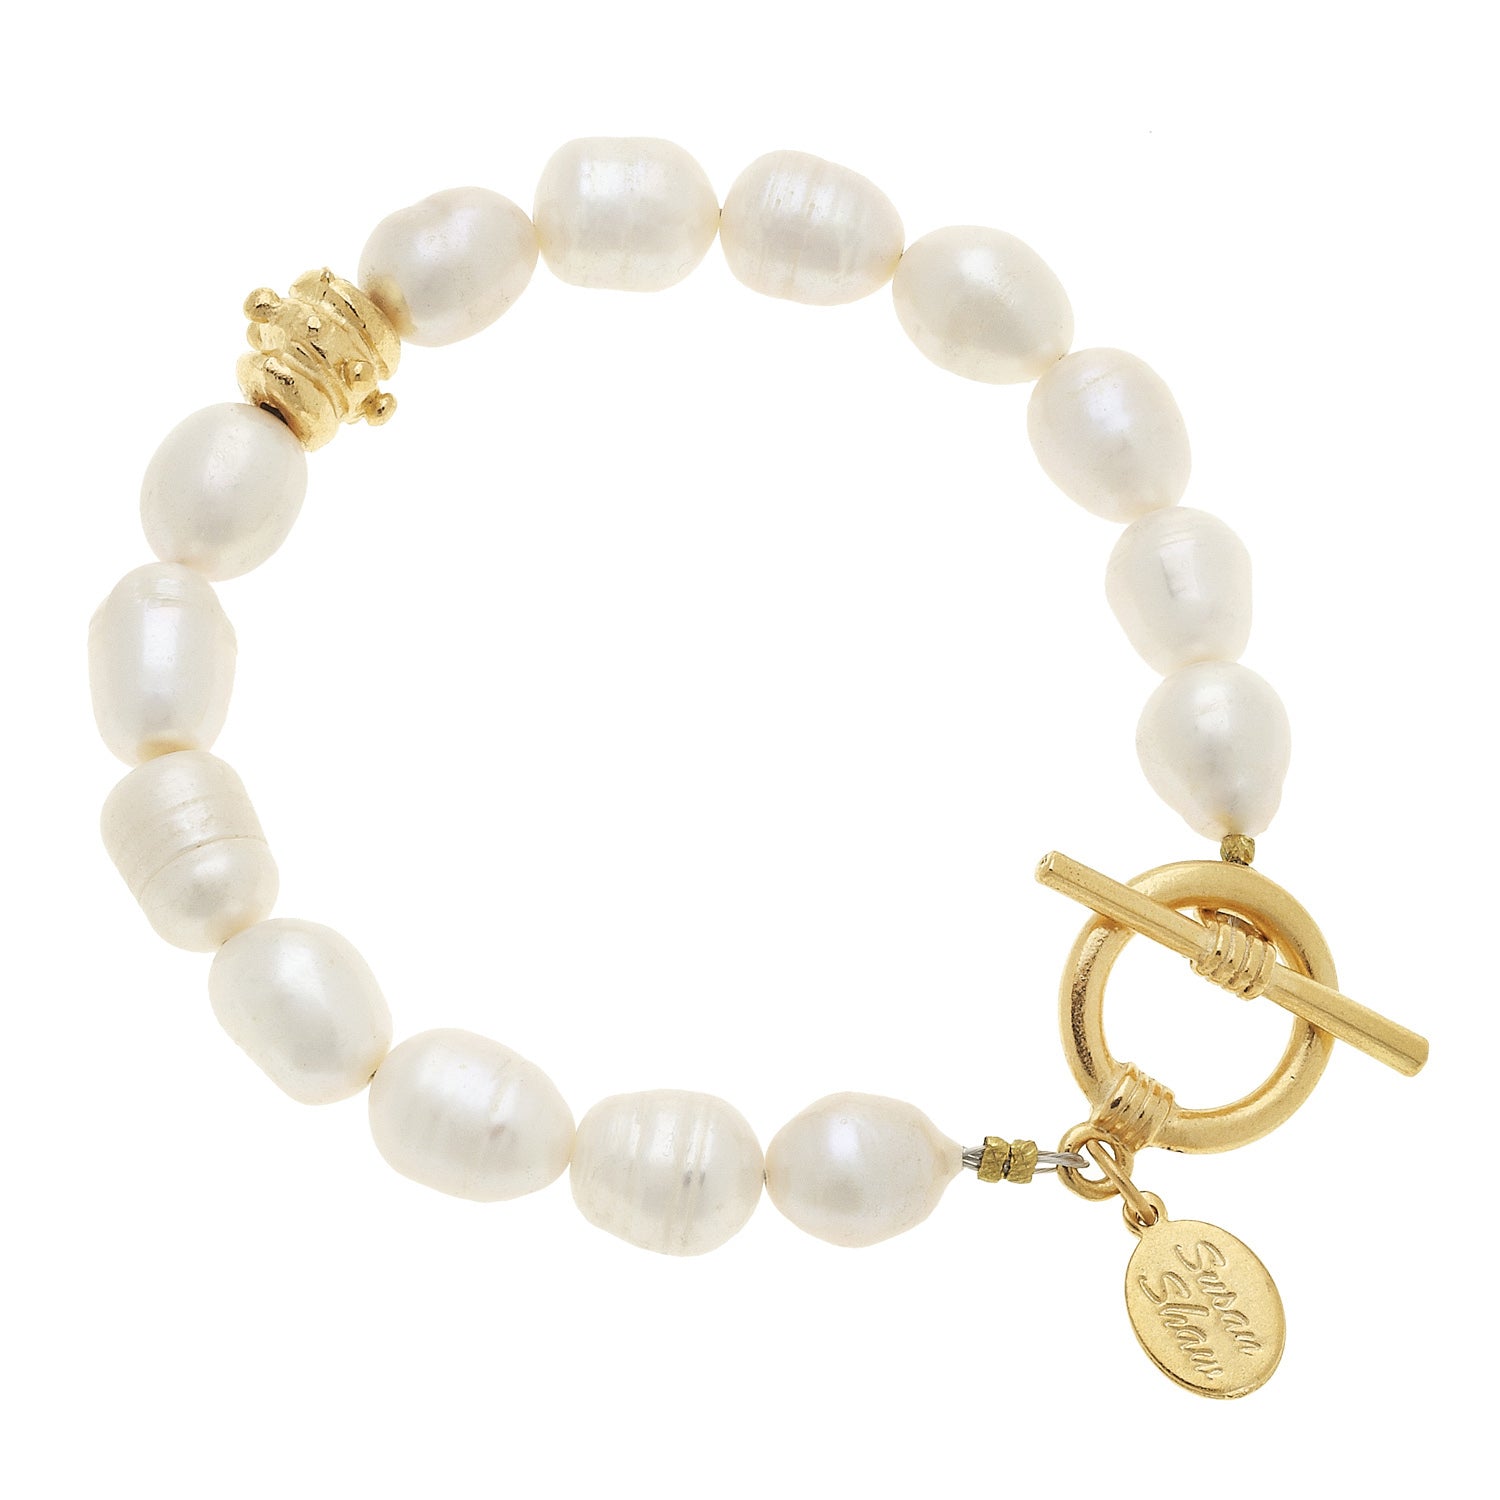 Susan Shaw Handcast Genuine Freshwater Pearl Tennis Bracelet, Gold Plated 8"